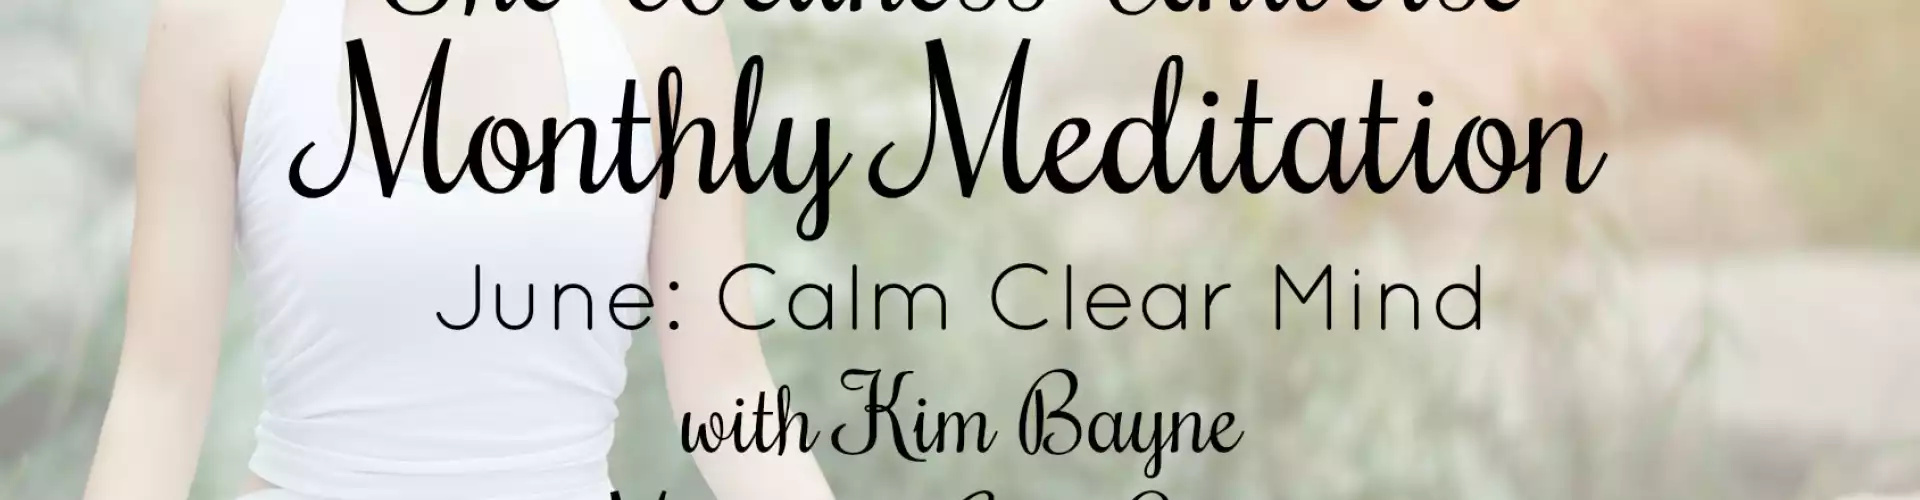 The Wellness Universe June 2018 Meditation with Kim Bayne: Calm Clear Mind